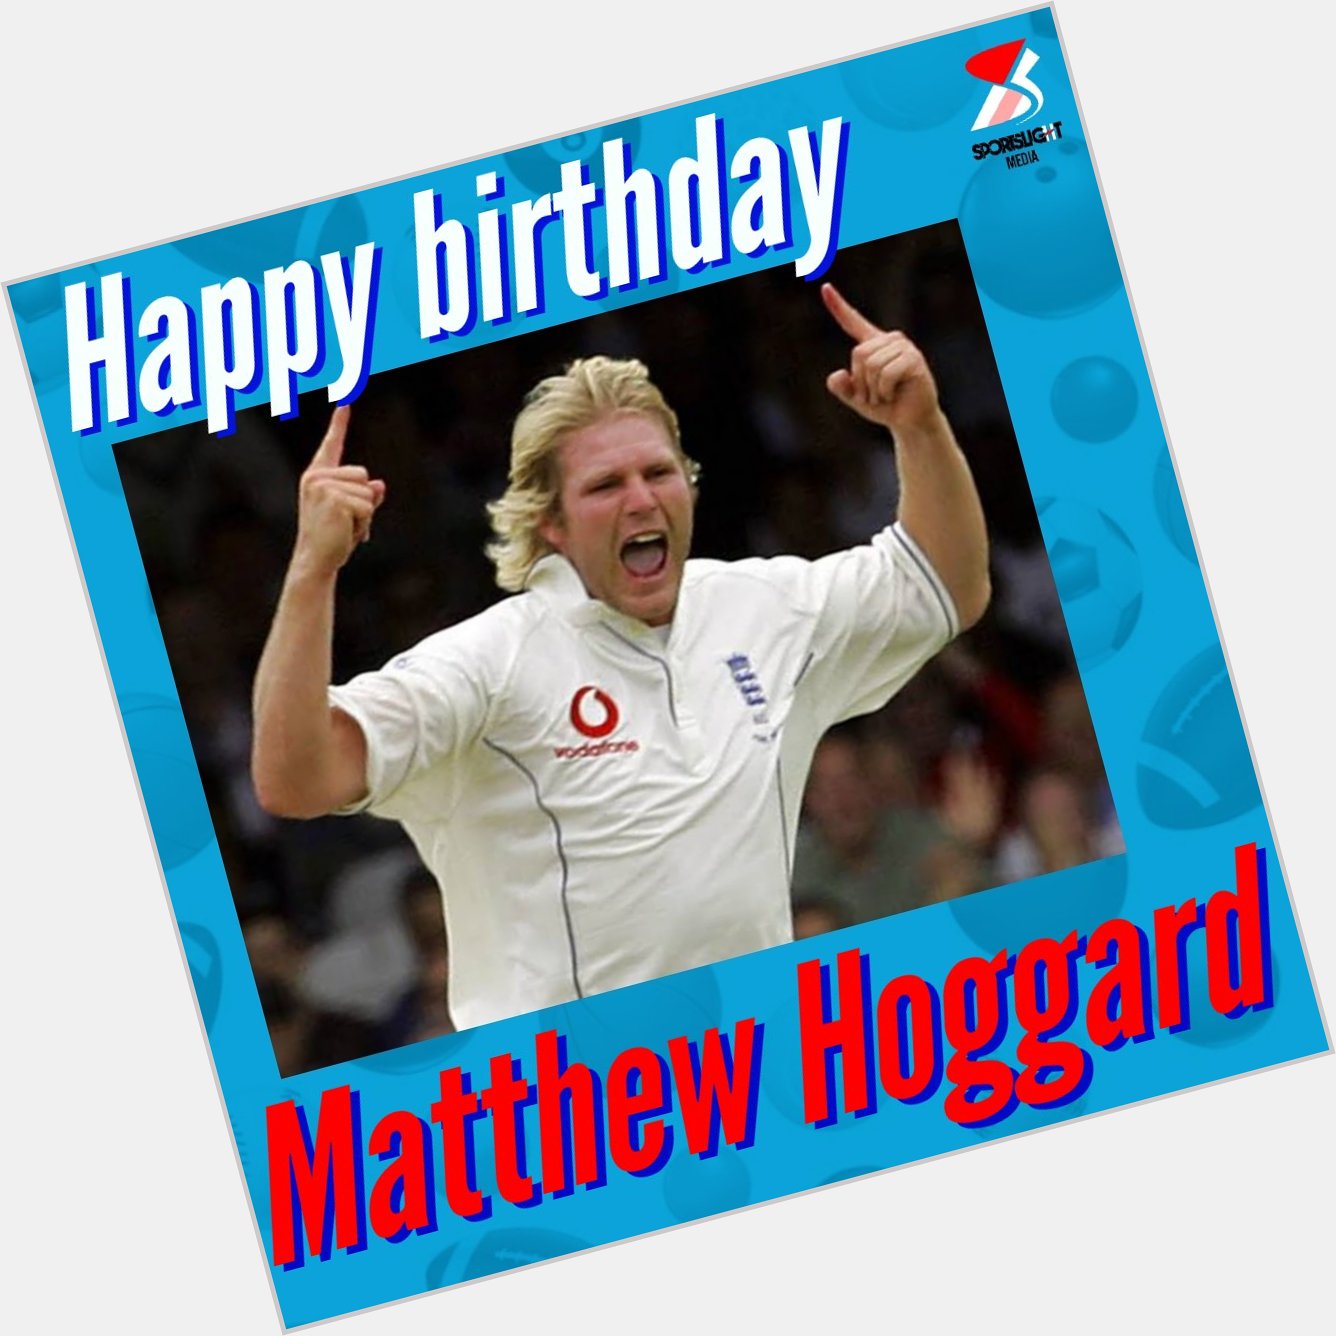 Happy birthday MATTHEW HOGGARD !!   